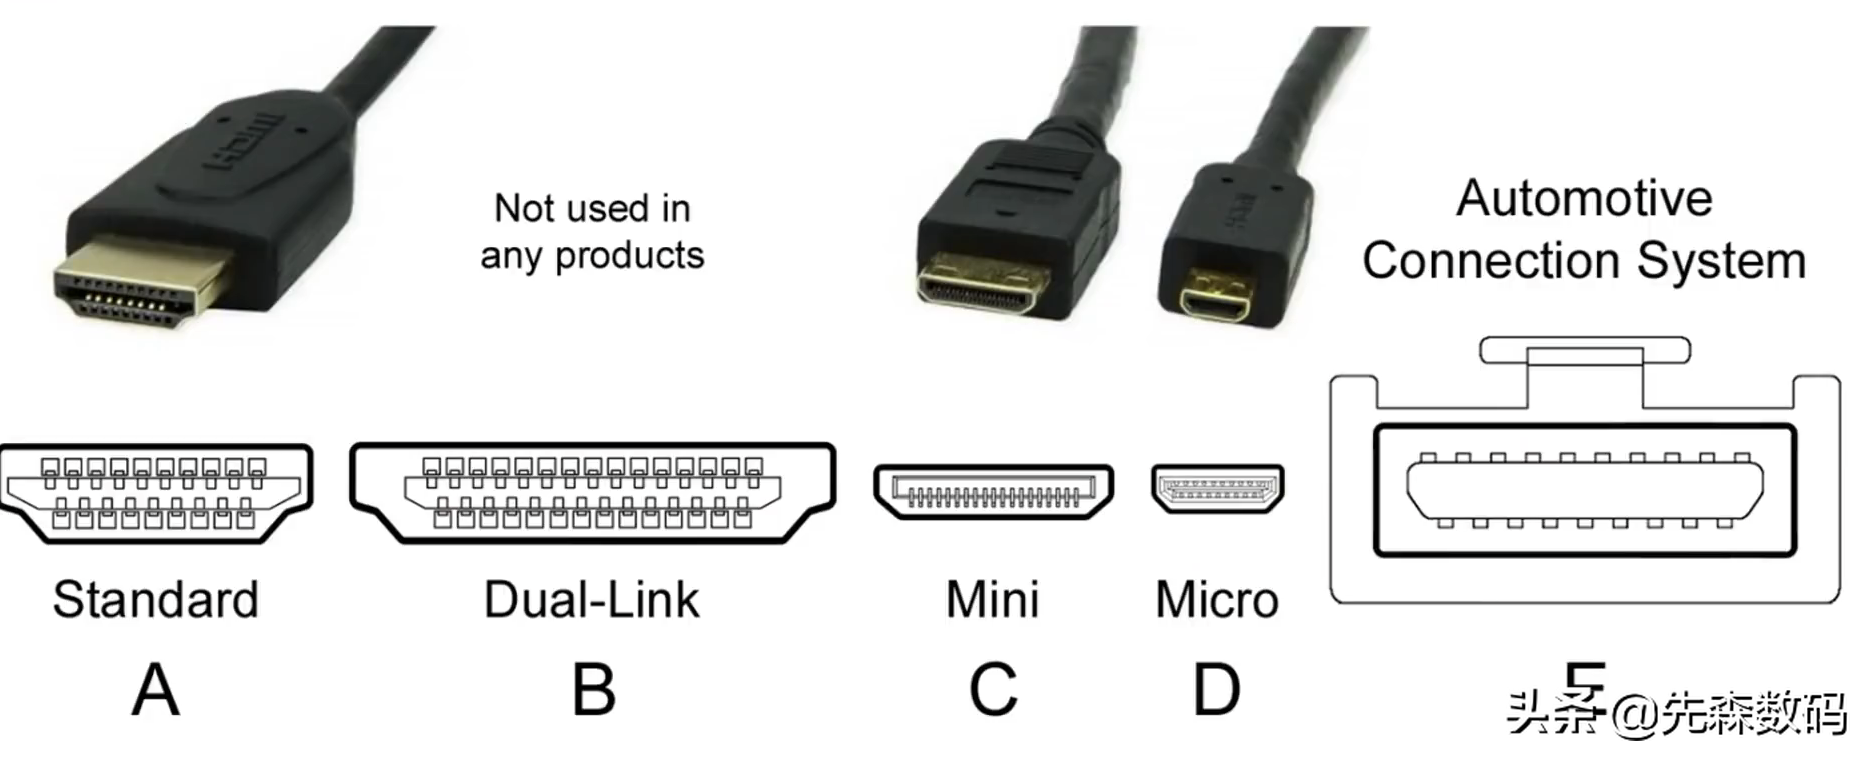 HDMI2.0和2.1有什么区别？为何推出5年还未普及，可不要小看这0.1